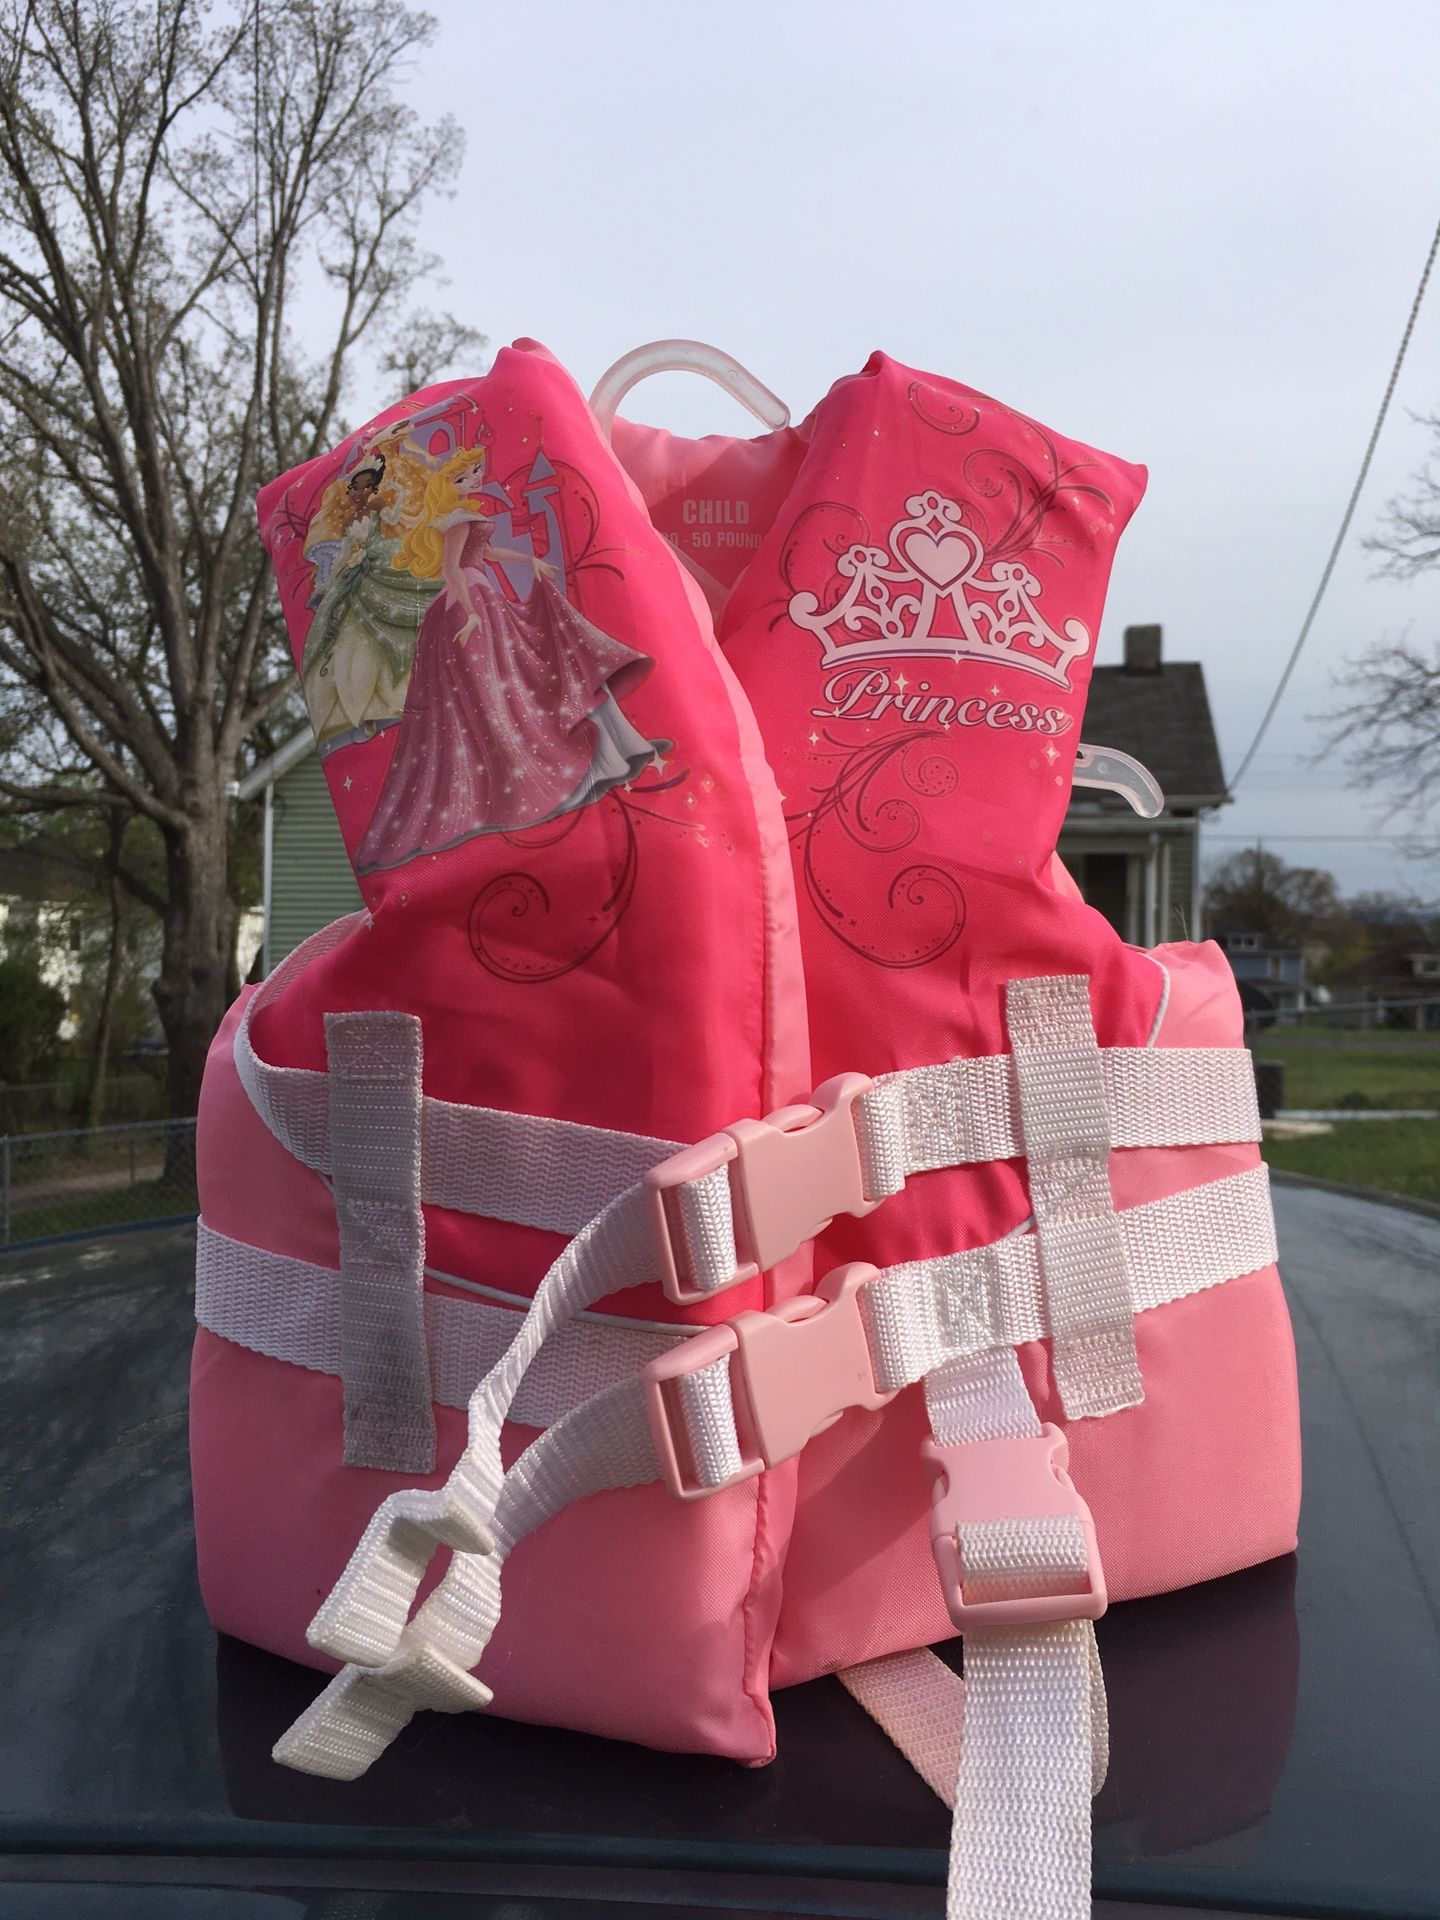 Child's life jacket 30-50 lbs